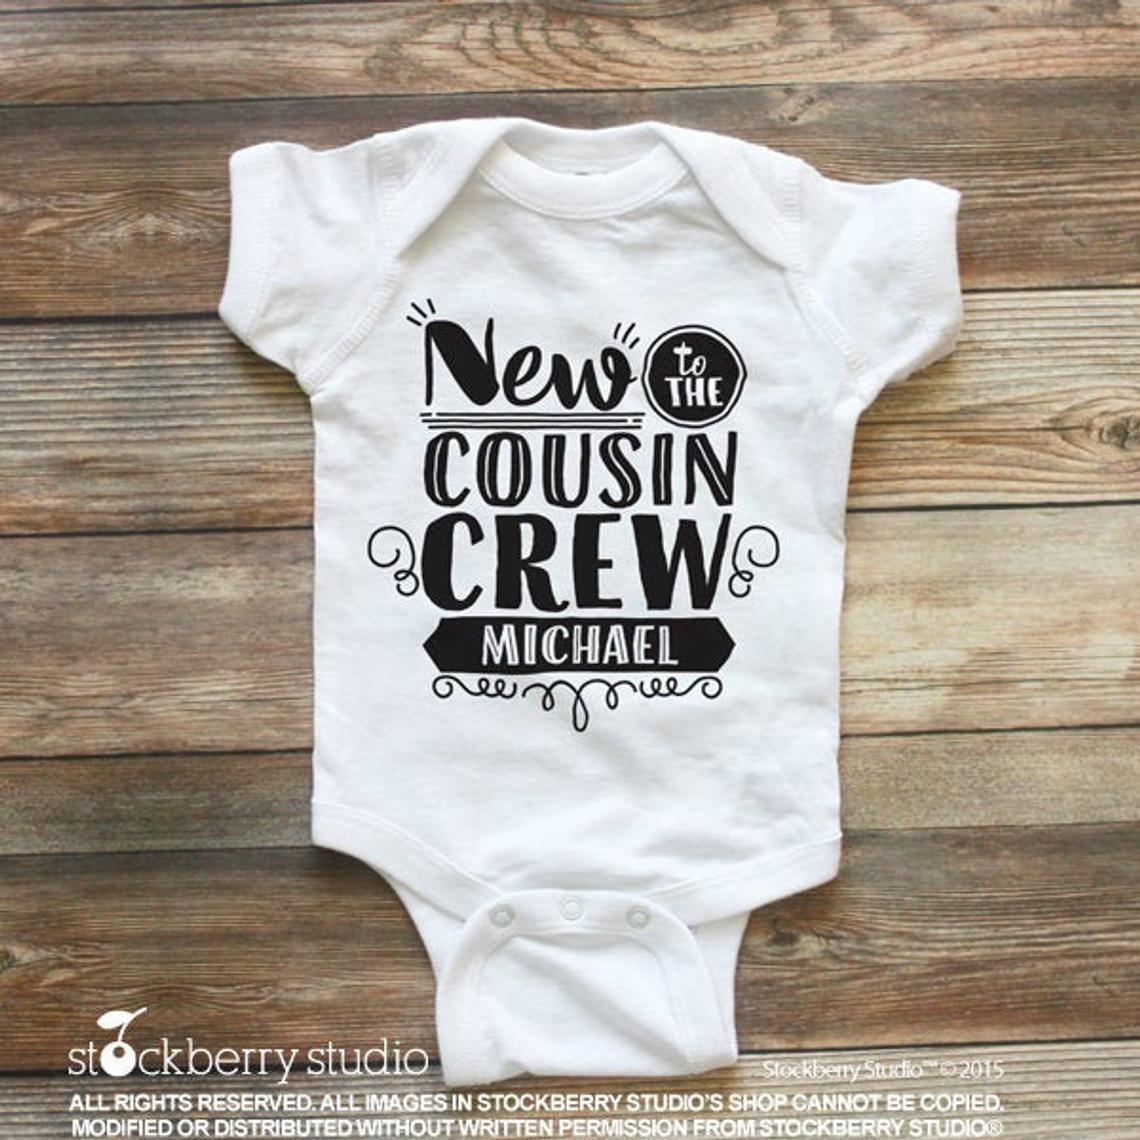 New to the Cousin Crew Announcement Shirt - Stockberry Studio